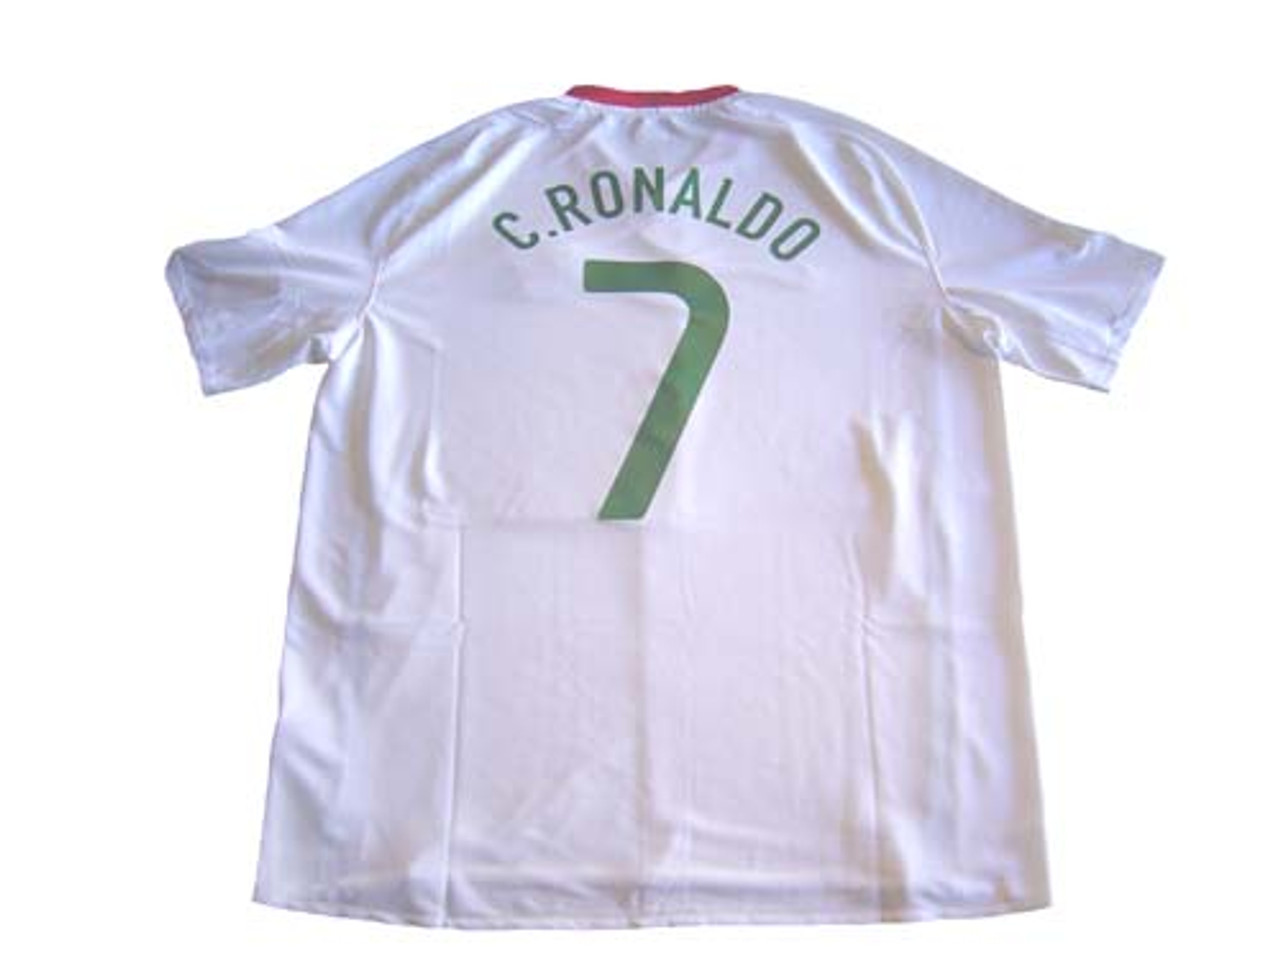 ronaldo white jersey